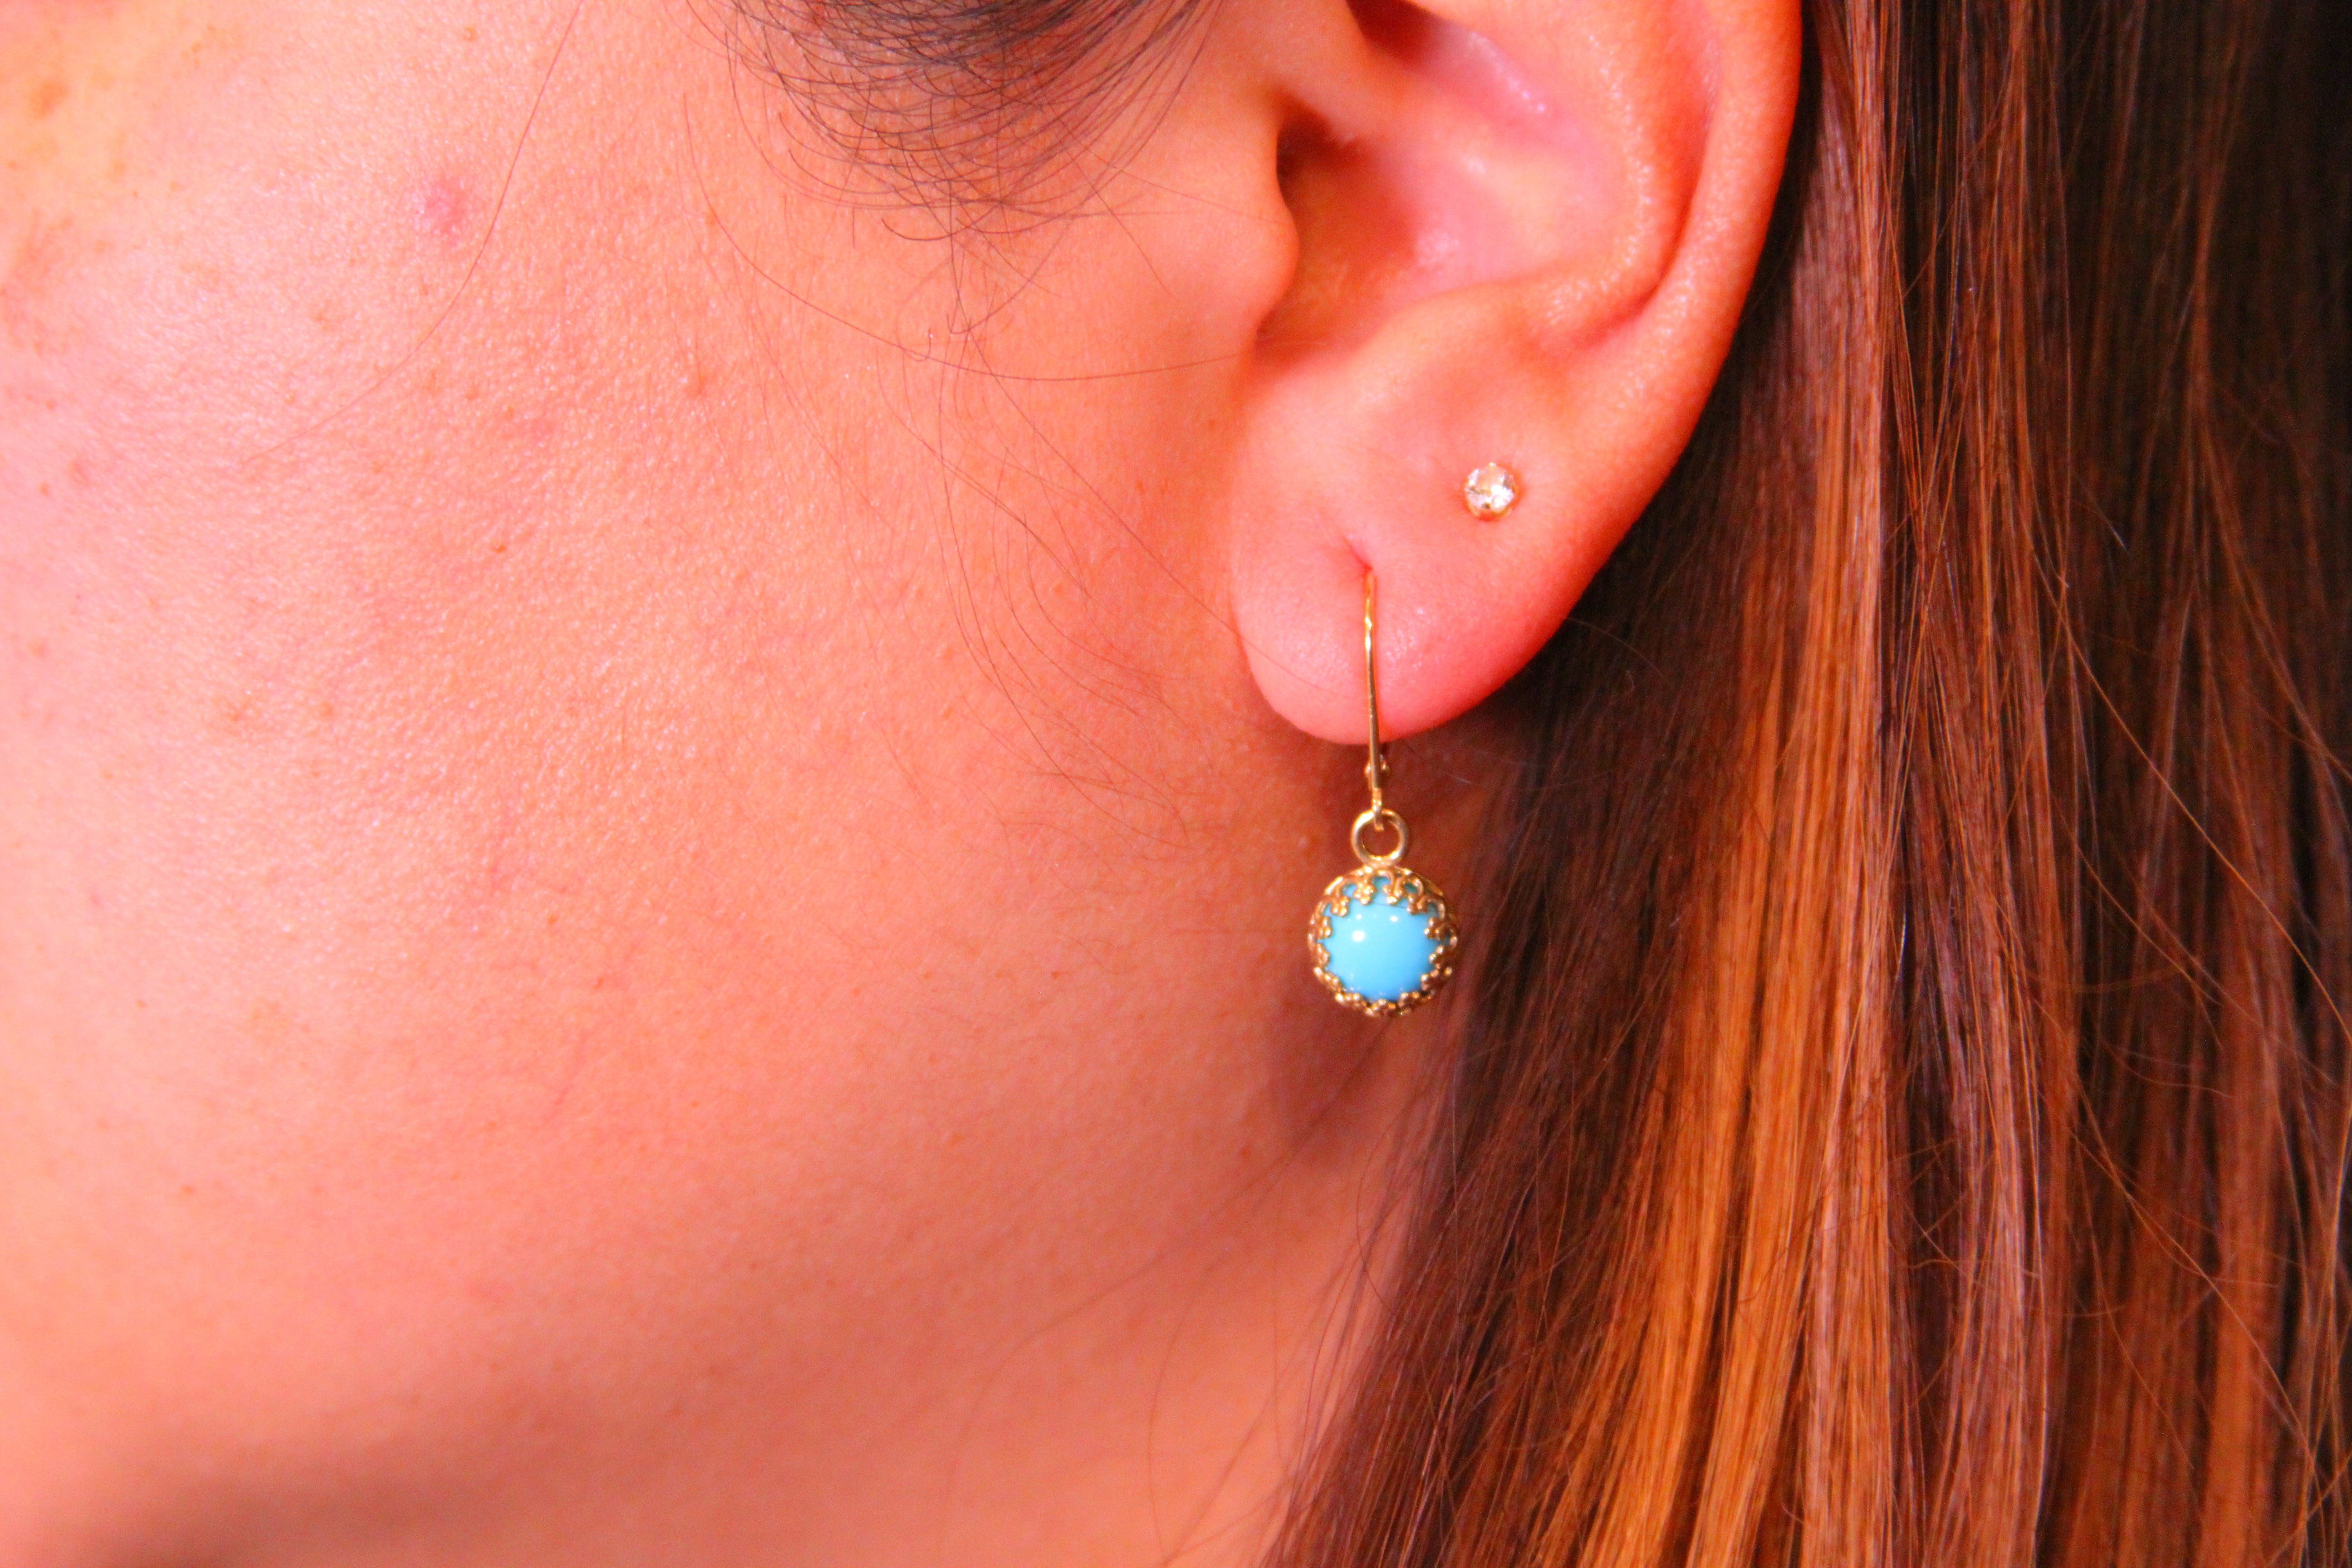 Sleeping Beauty Turquoise Globe Drop Earrings